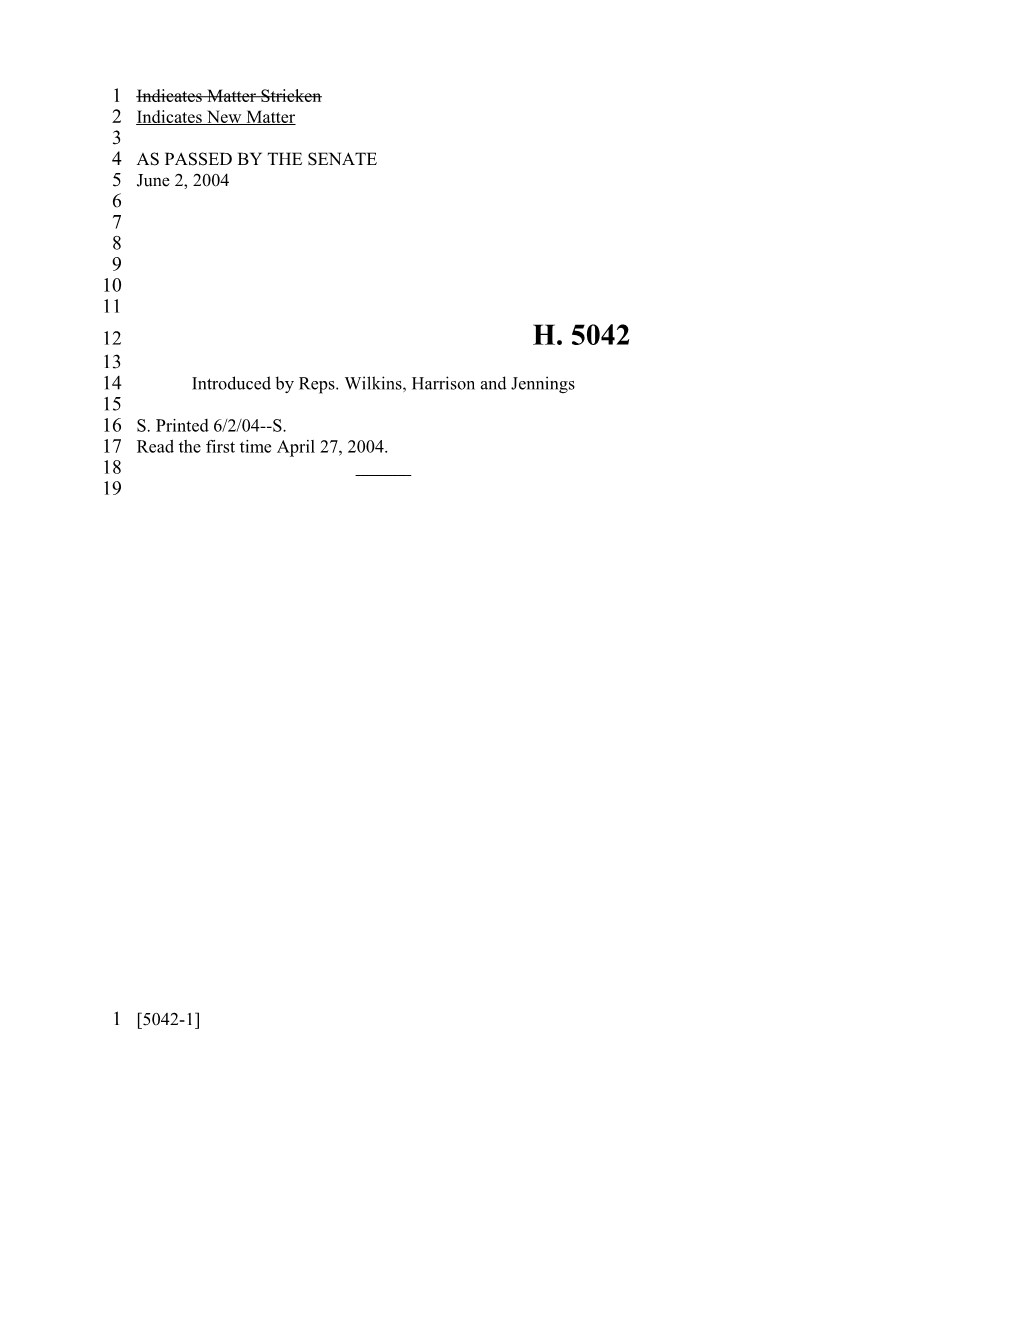 2003-2004 Bill 5042: Registering of Lobbyist and Lobbyist Principals - South Carolina